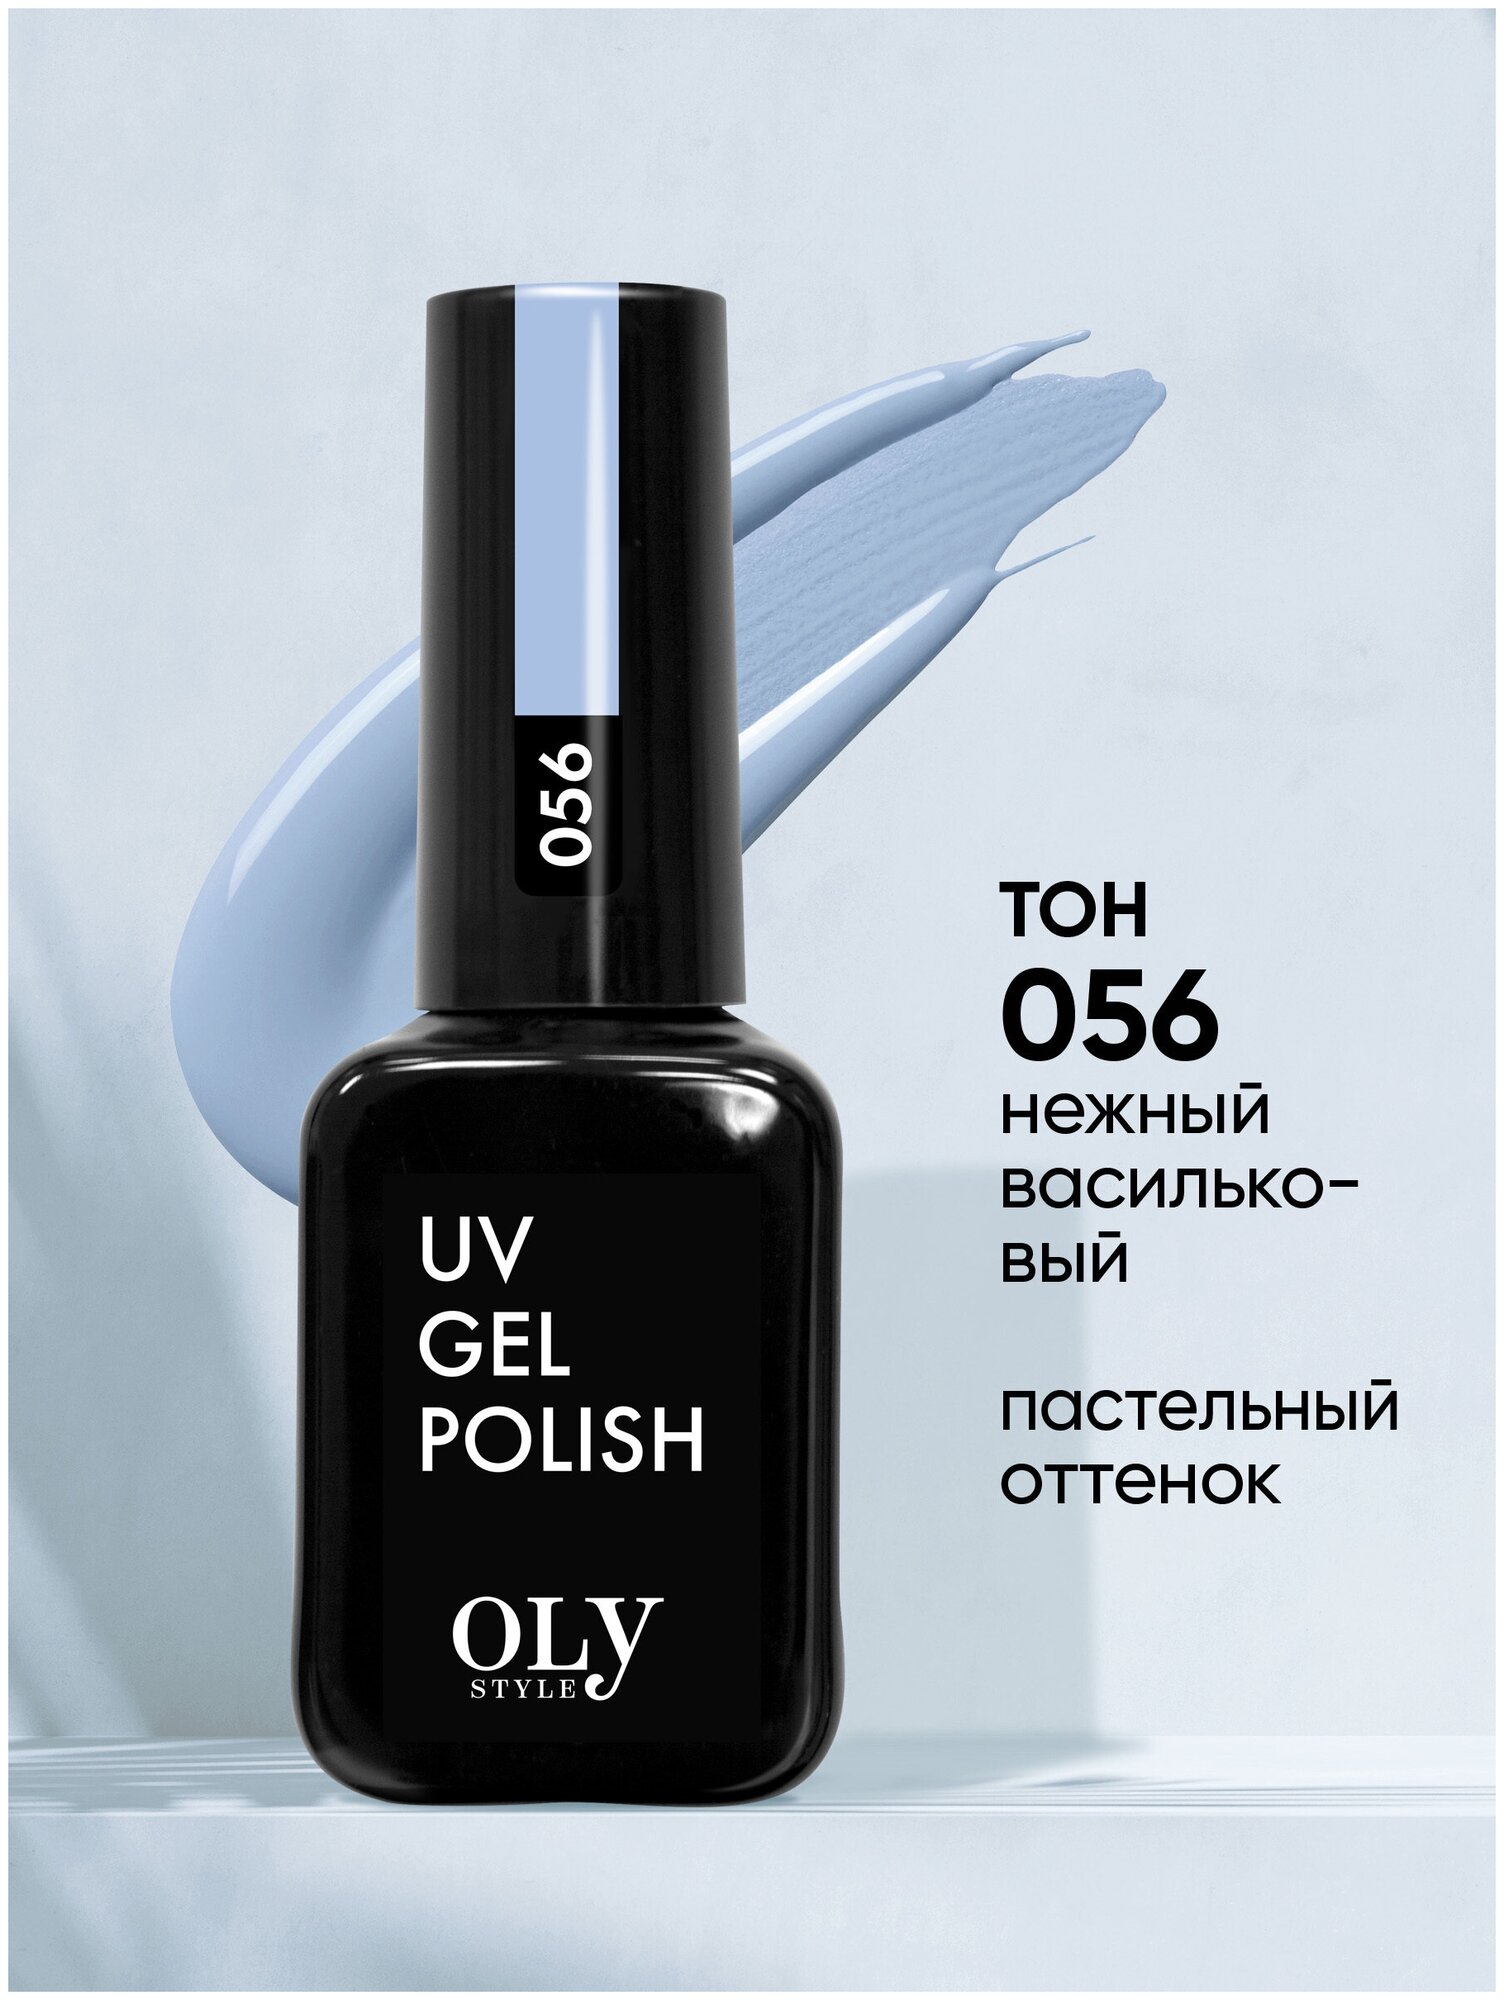 Olystyle Гель-лак для ногтей OLS UV, тон 056 нежный васильковый, 10мл